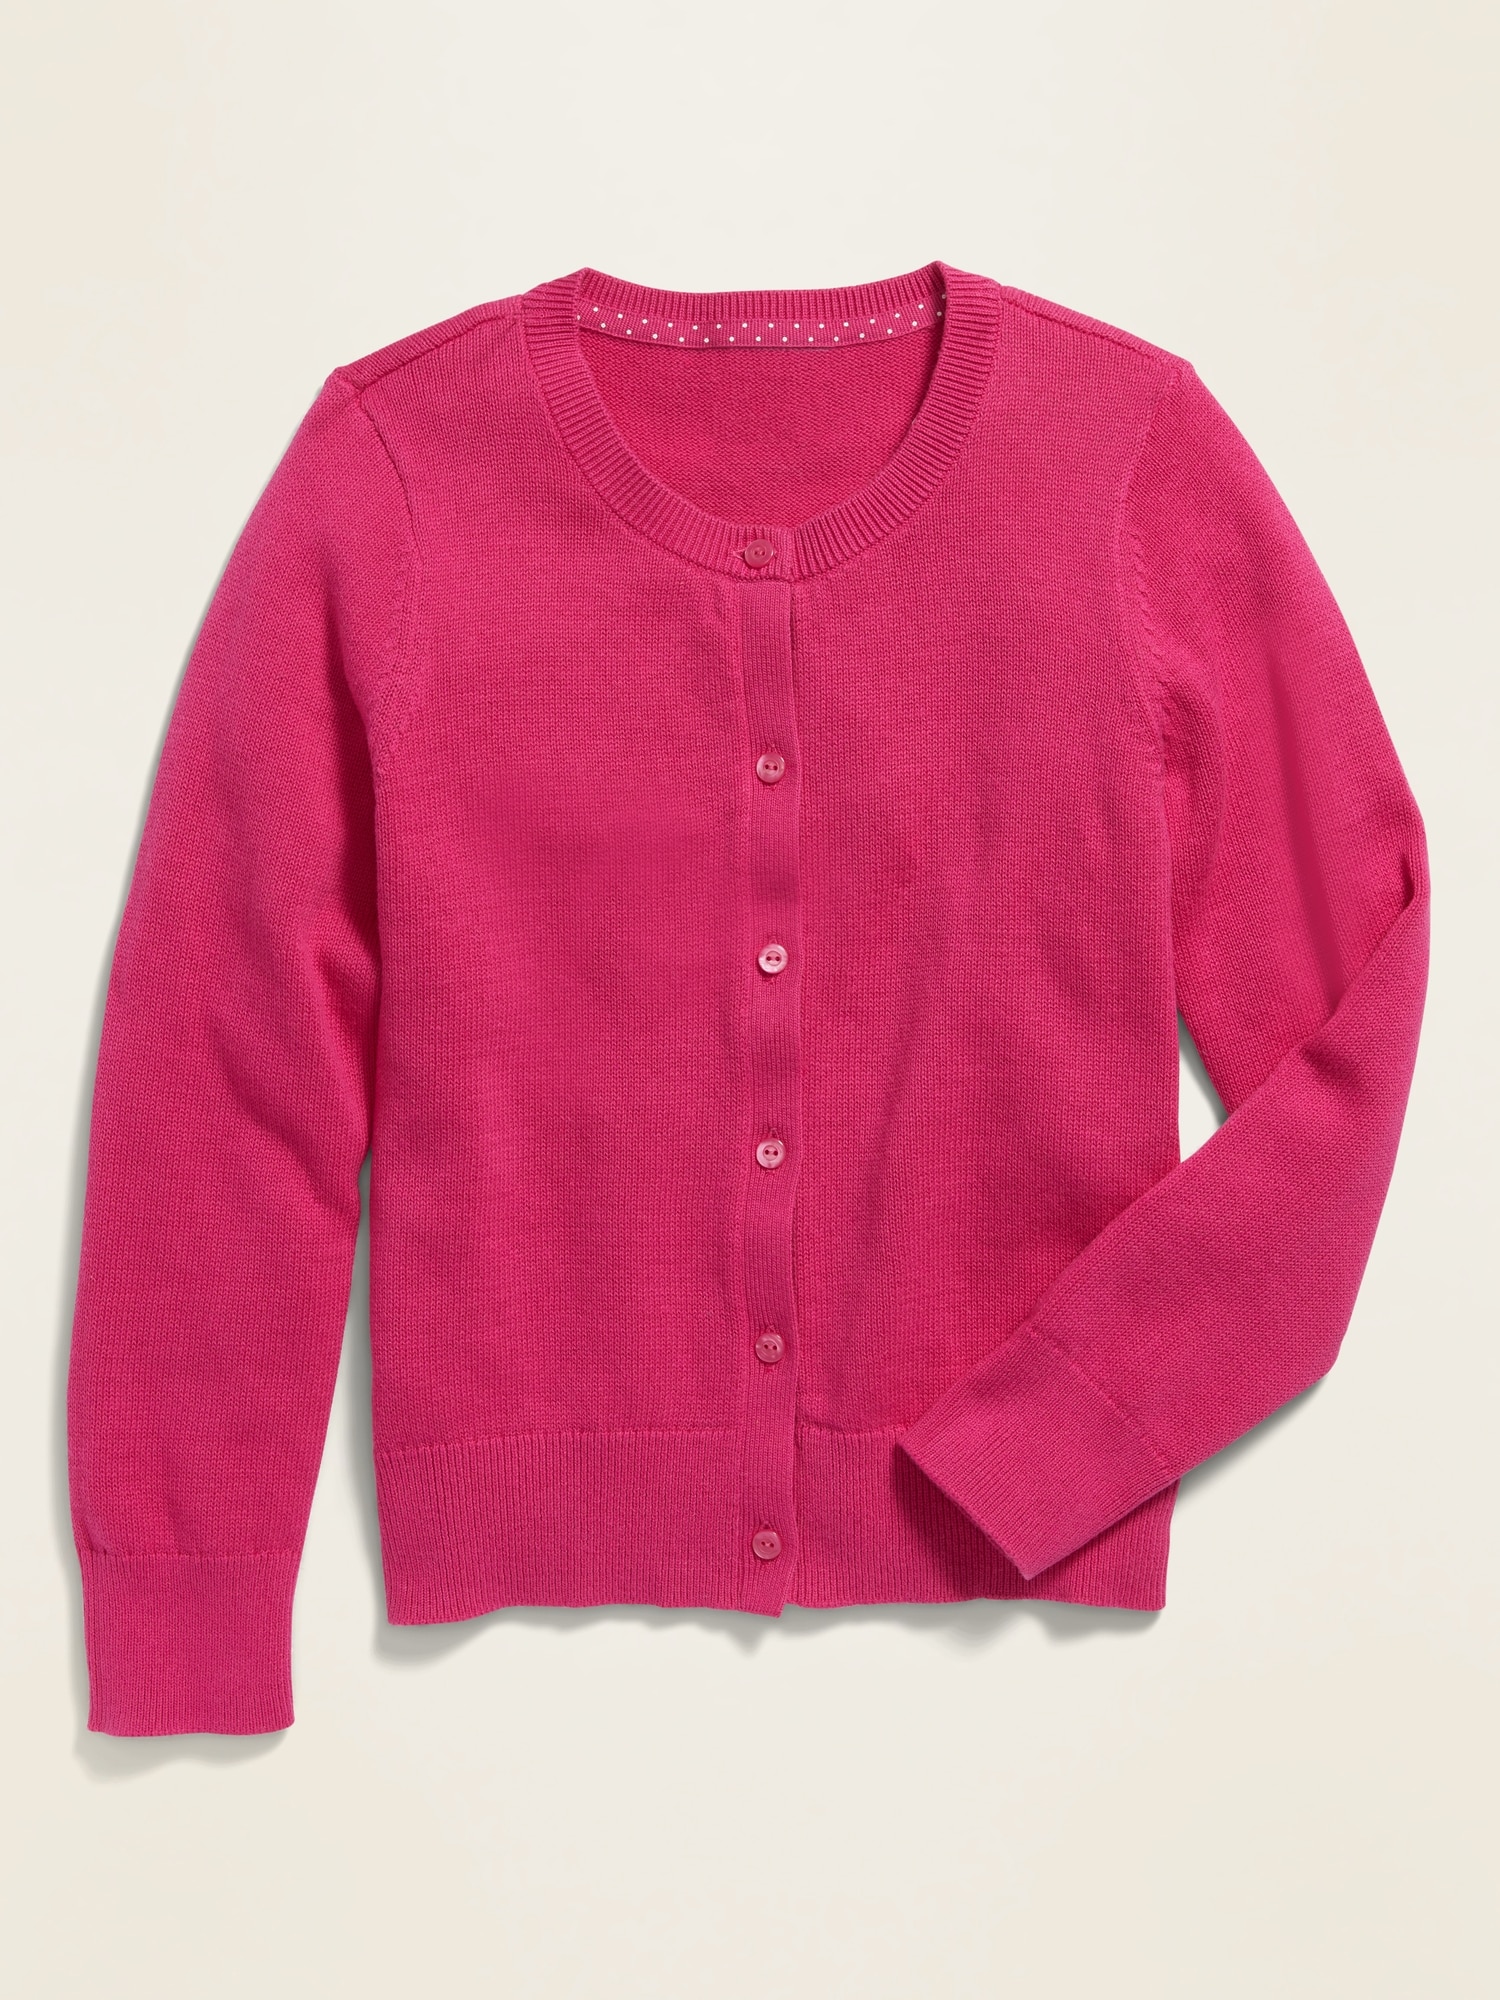 Toddler Button Down School Uniforms Cardigan Little Girl Knit Cardigan Sweater 